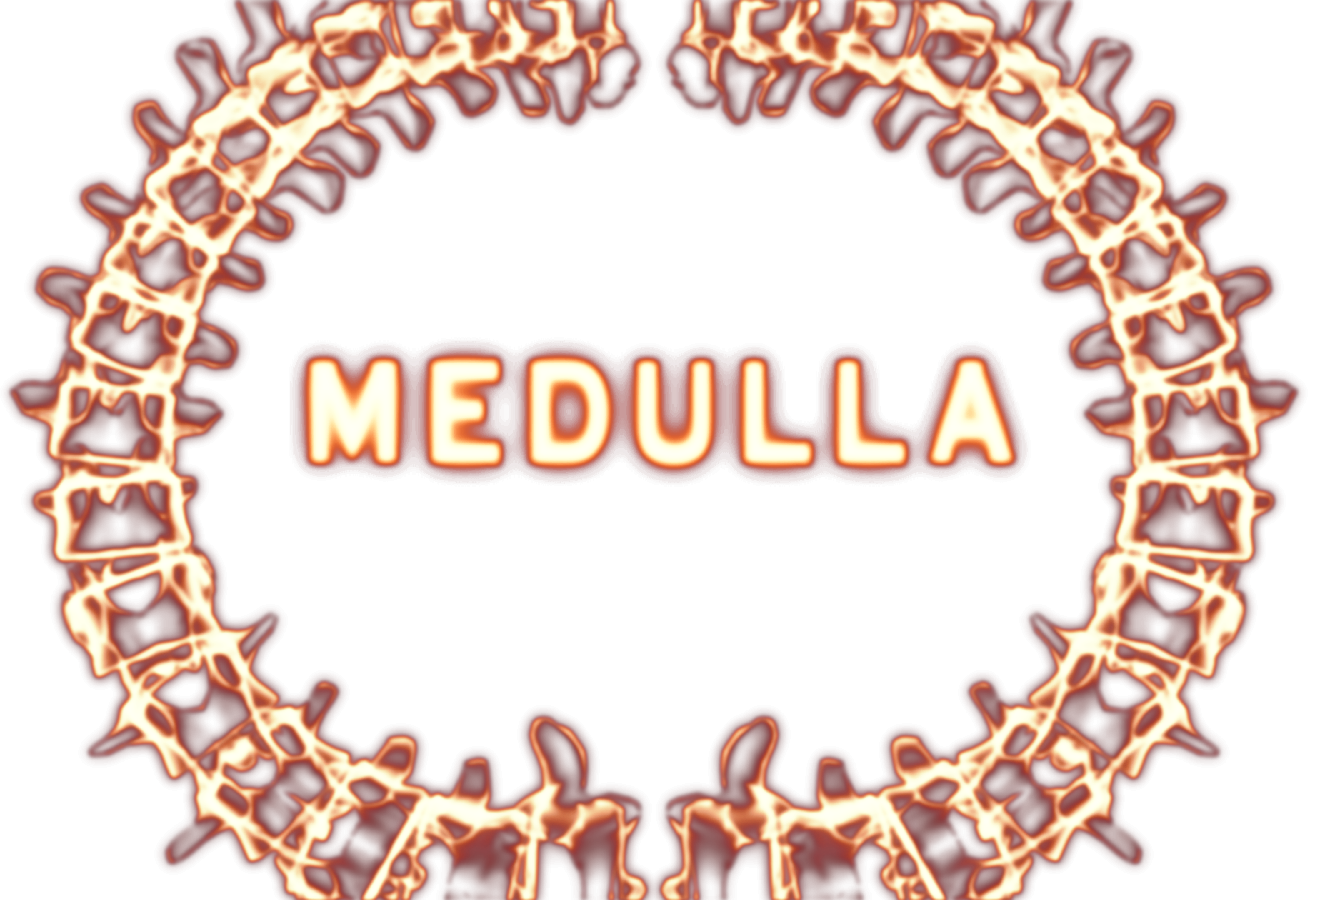 Compagnie Medulla